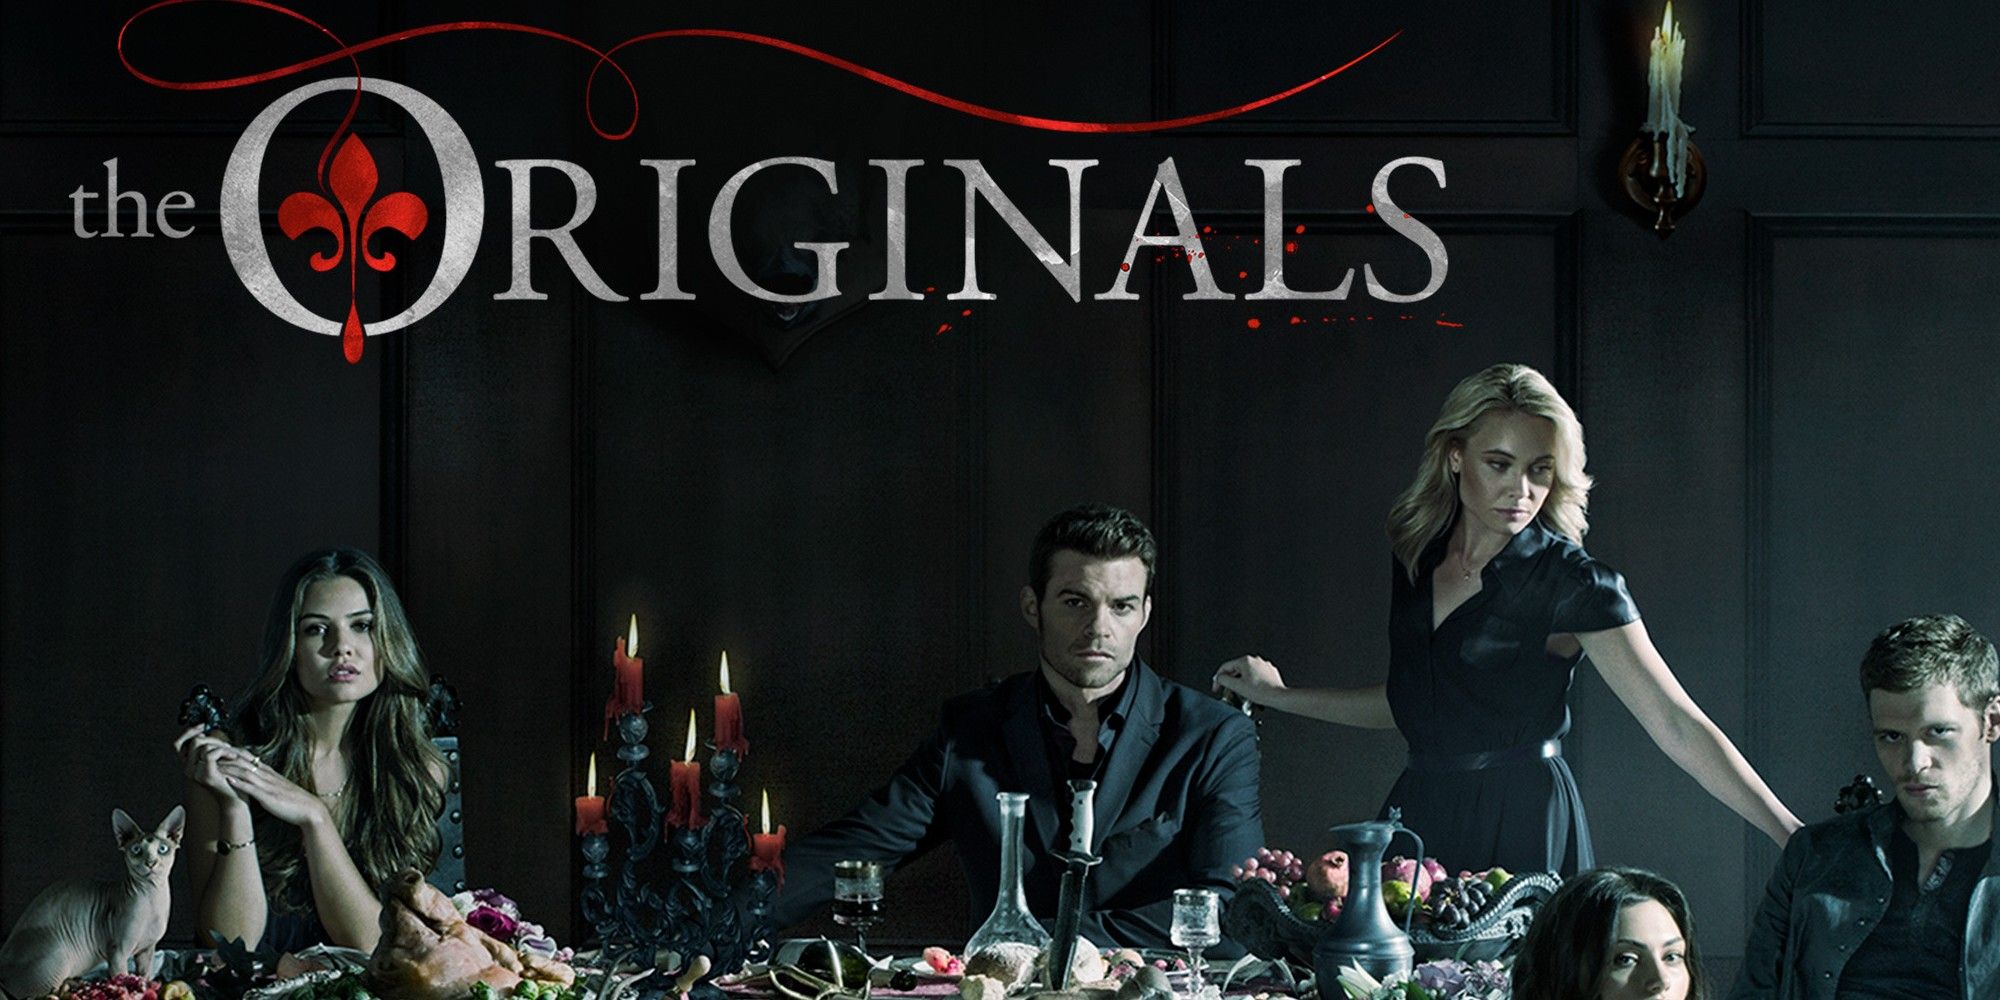 The Originals Vampire Diaries Family Tree